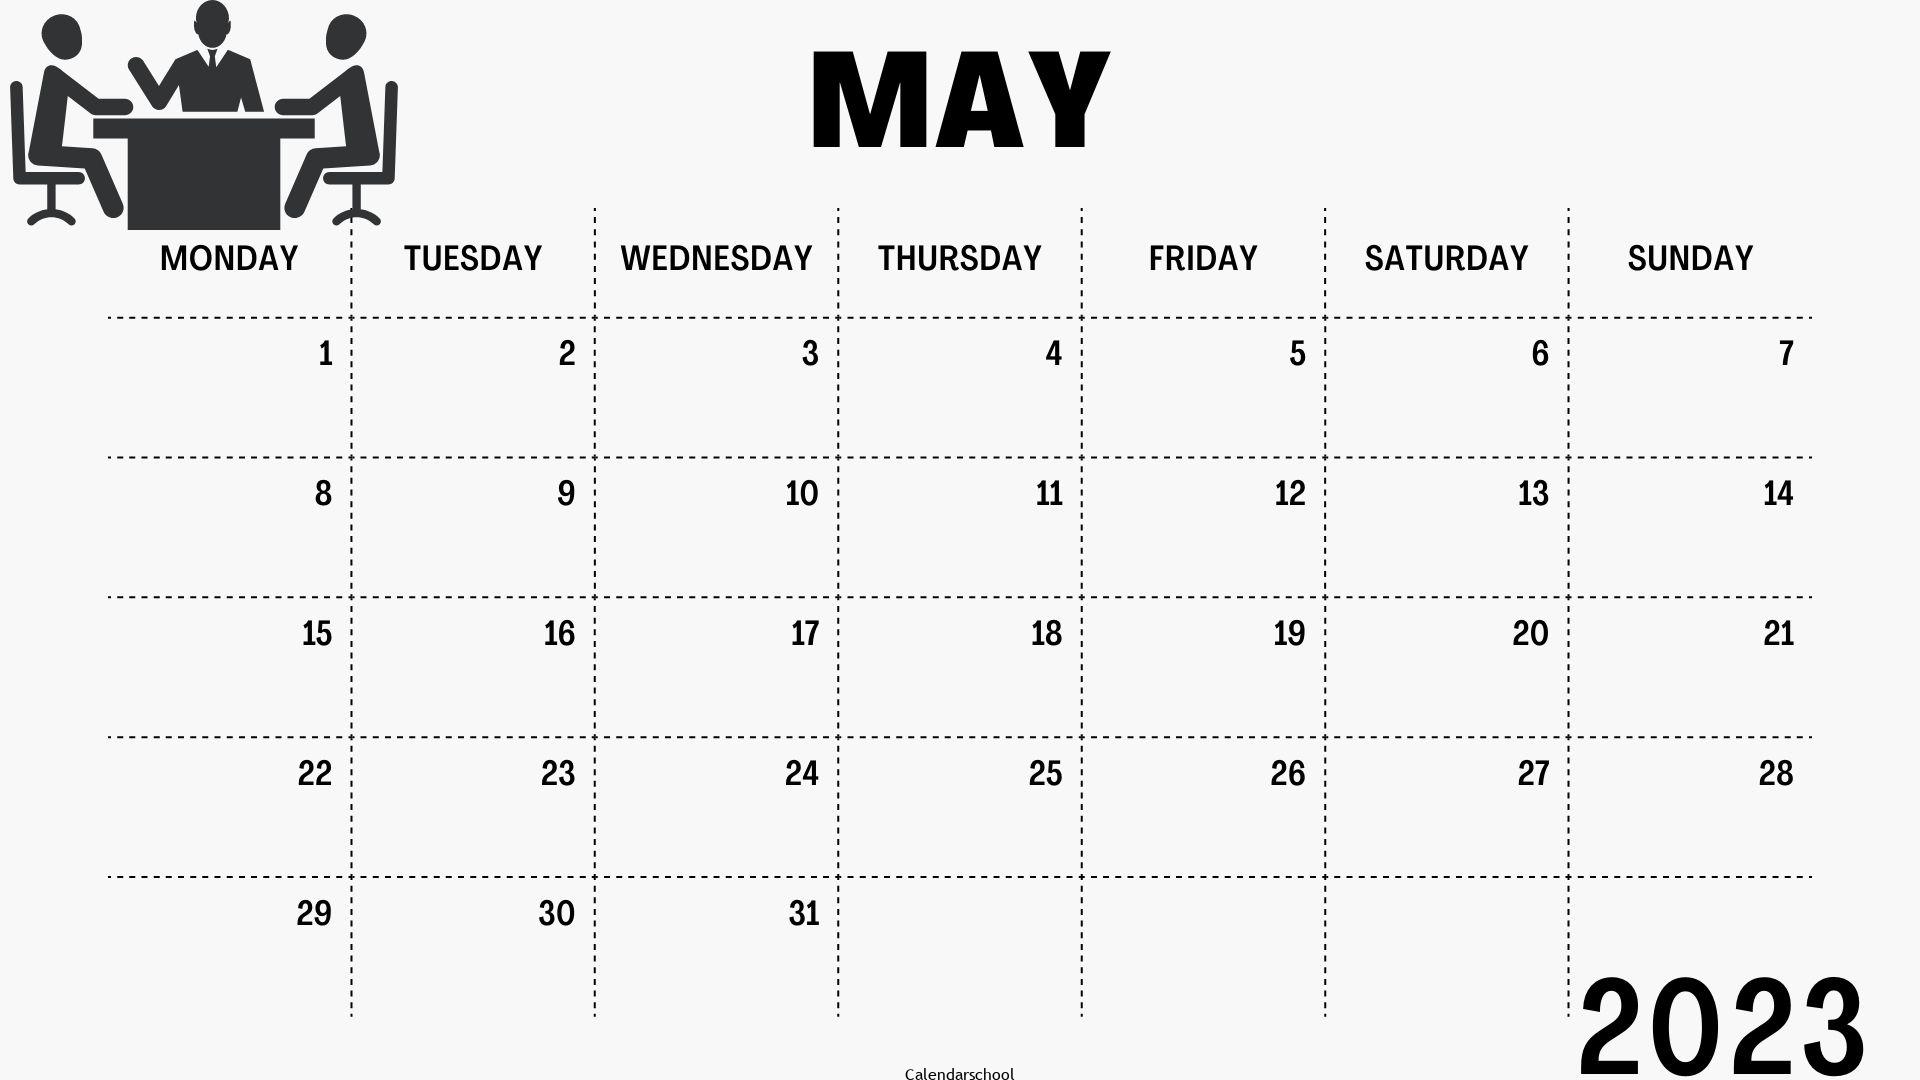 2023 May Calendar Printable